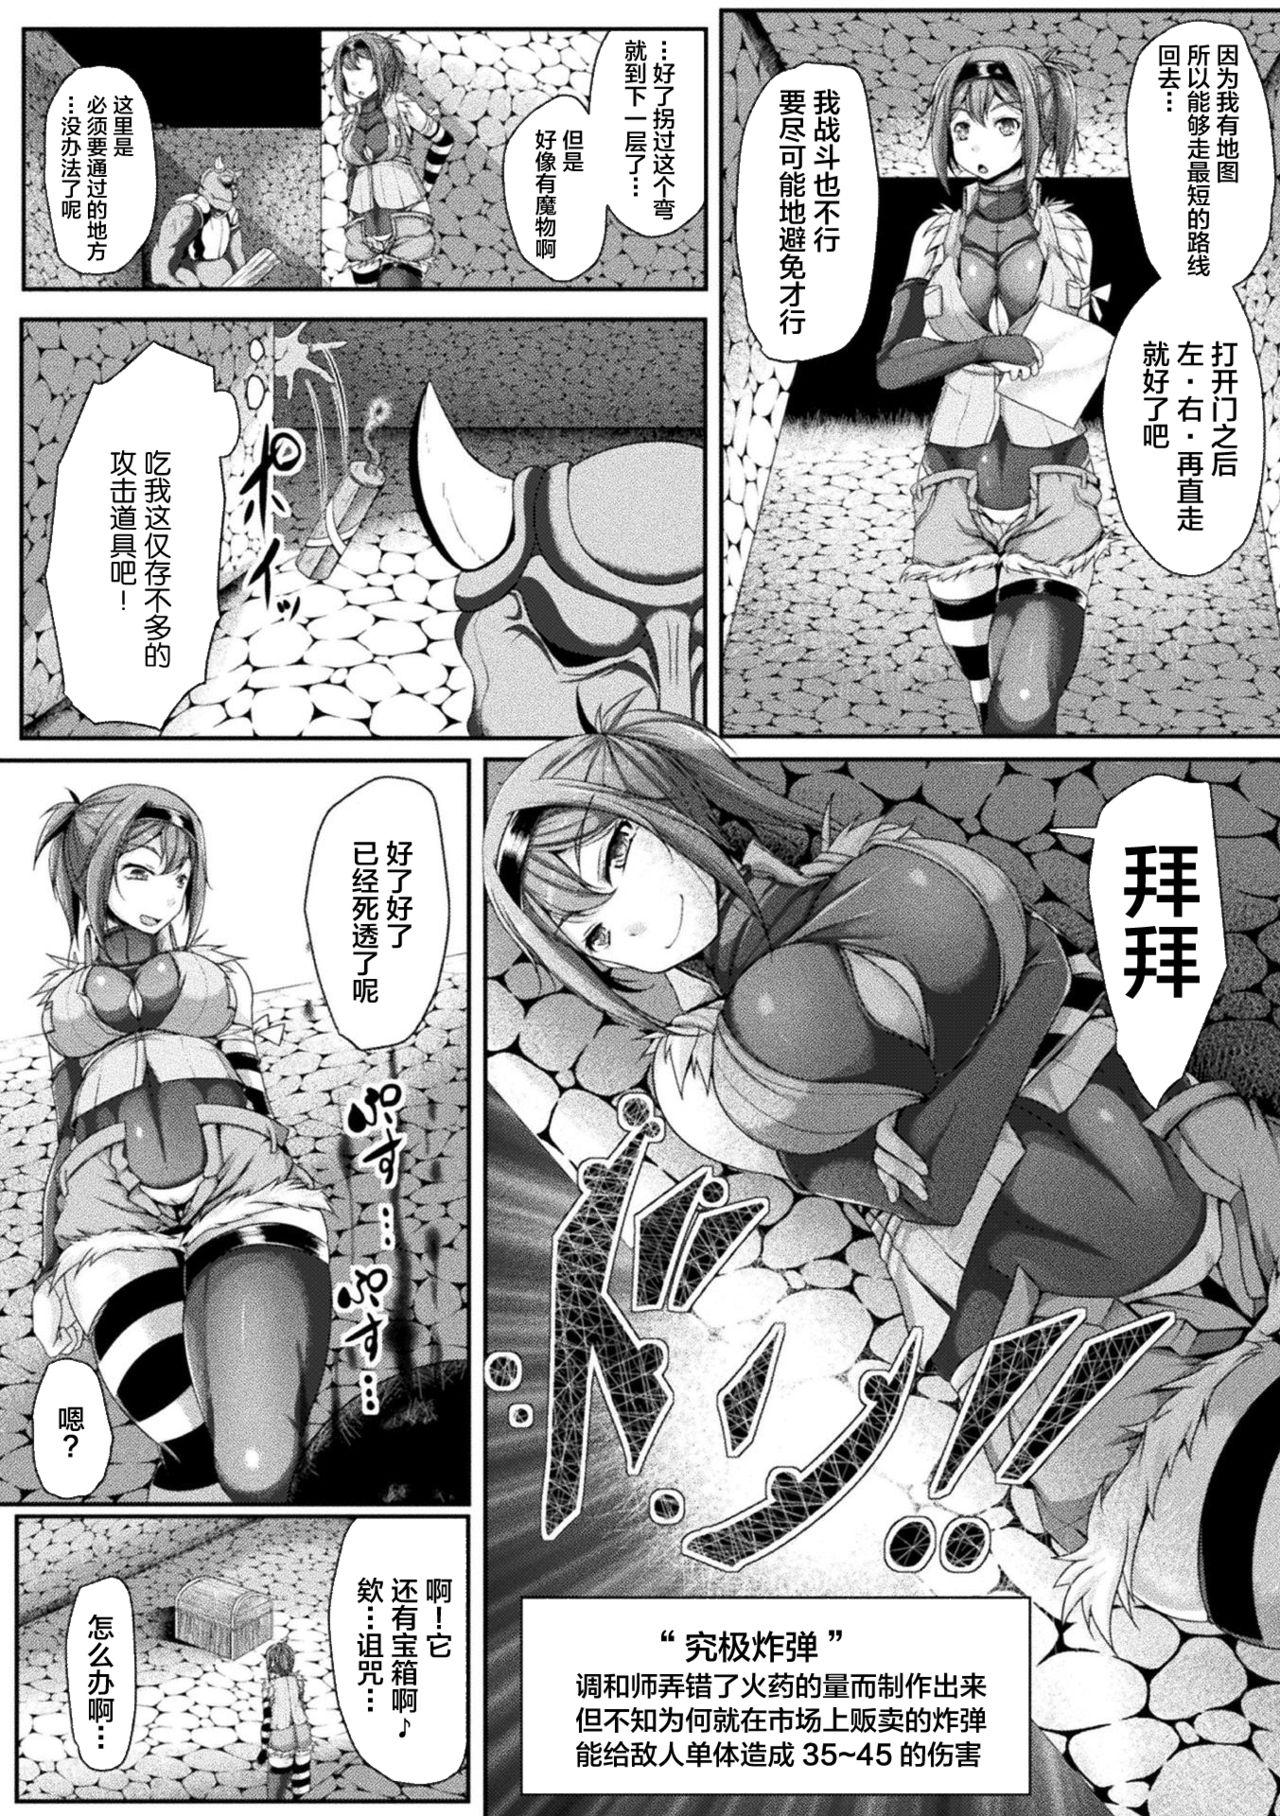 2D Comic Magazine Zecchou Kairaku ga Tomaranai Ero-Trap Dungeon Vol. 1 65